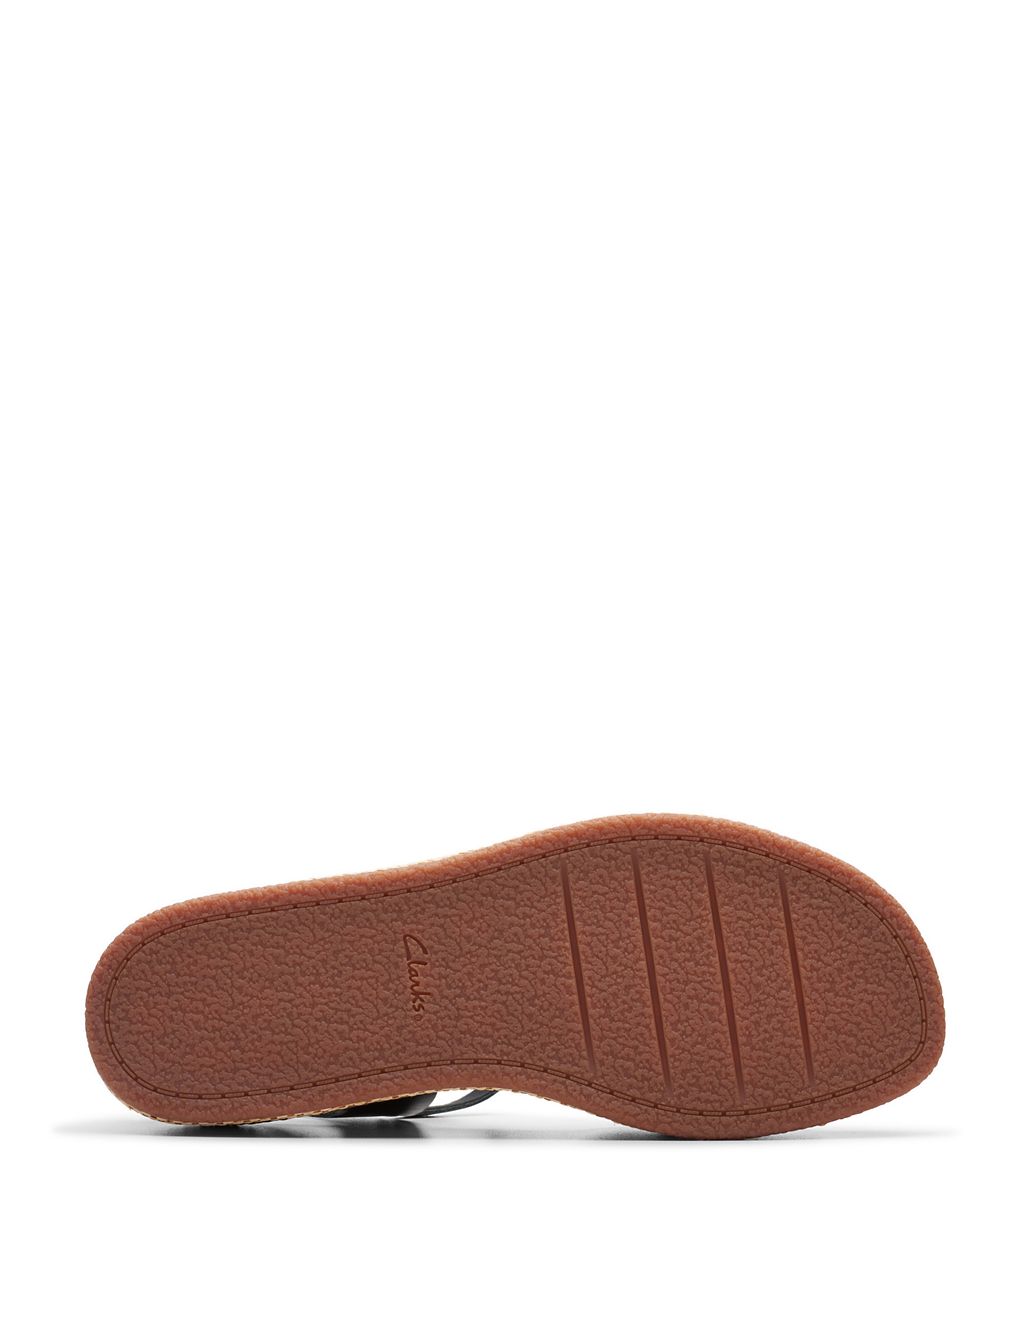 Leather Metallic Wedge Sandals 4 of 6